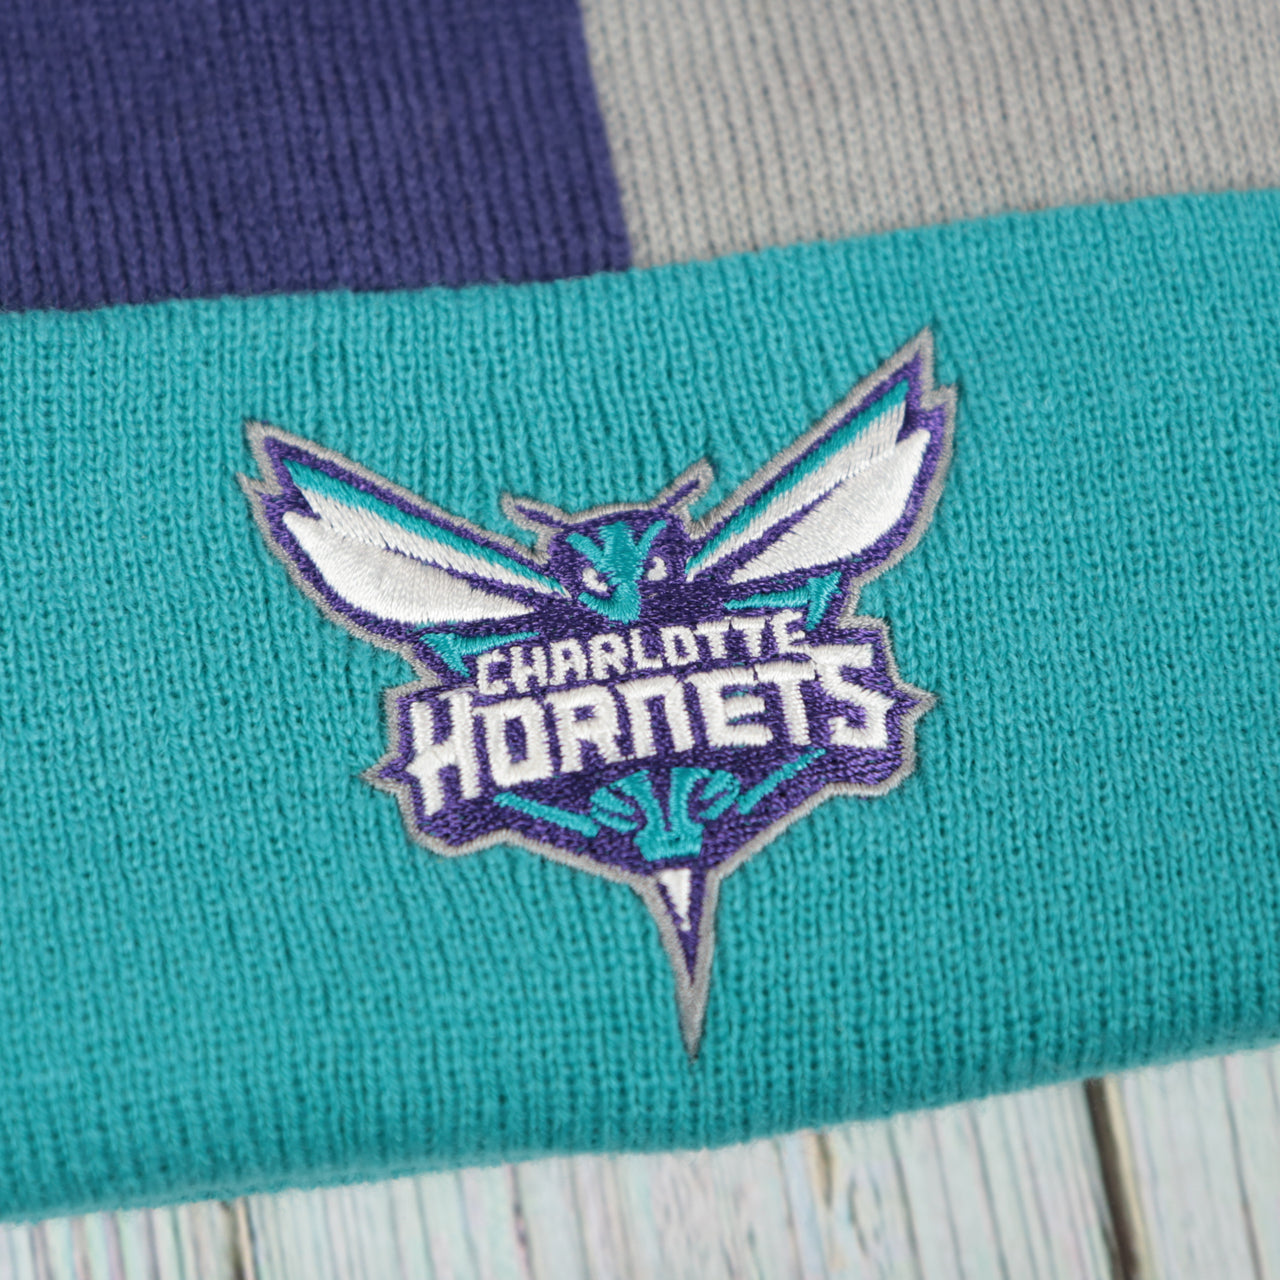 hornets logo on the Charlotte Hornets Cuffed Logo Split Beanie With Black Pom Pom | Teal, White, And Black Beanie